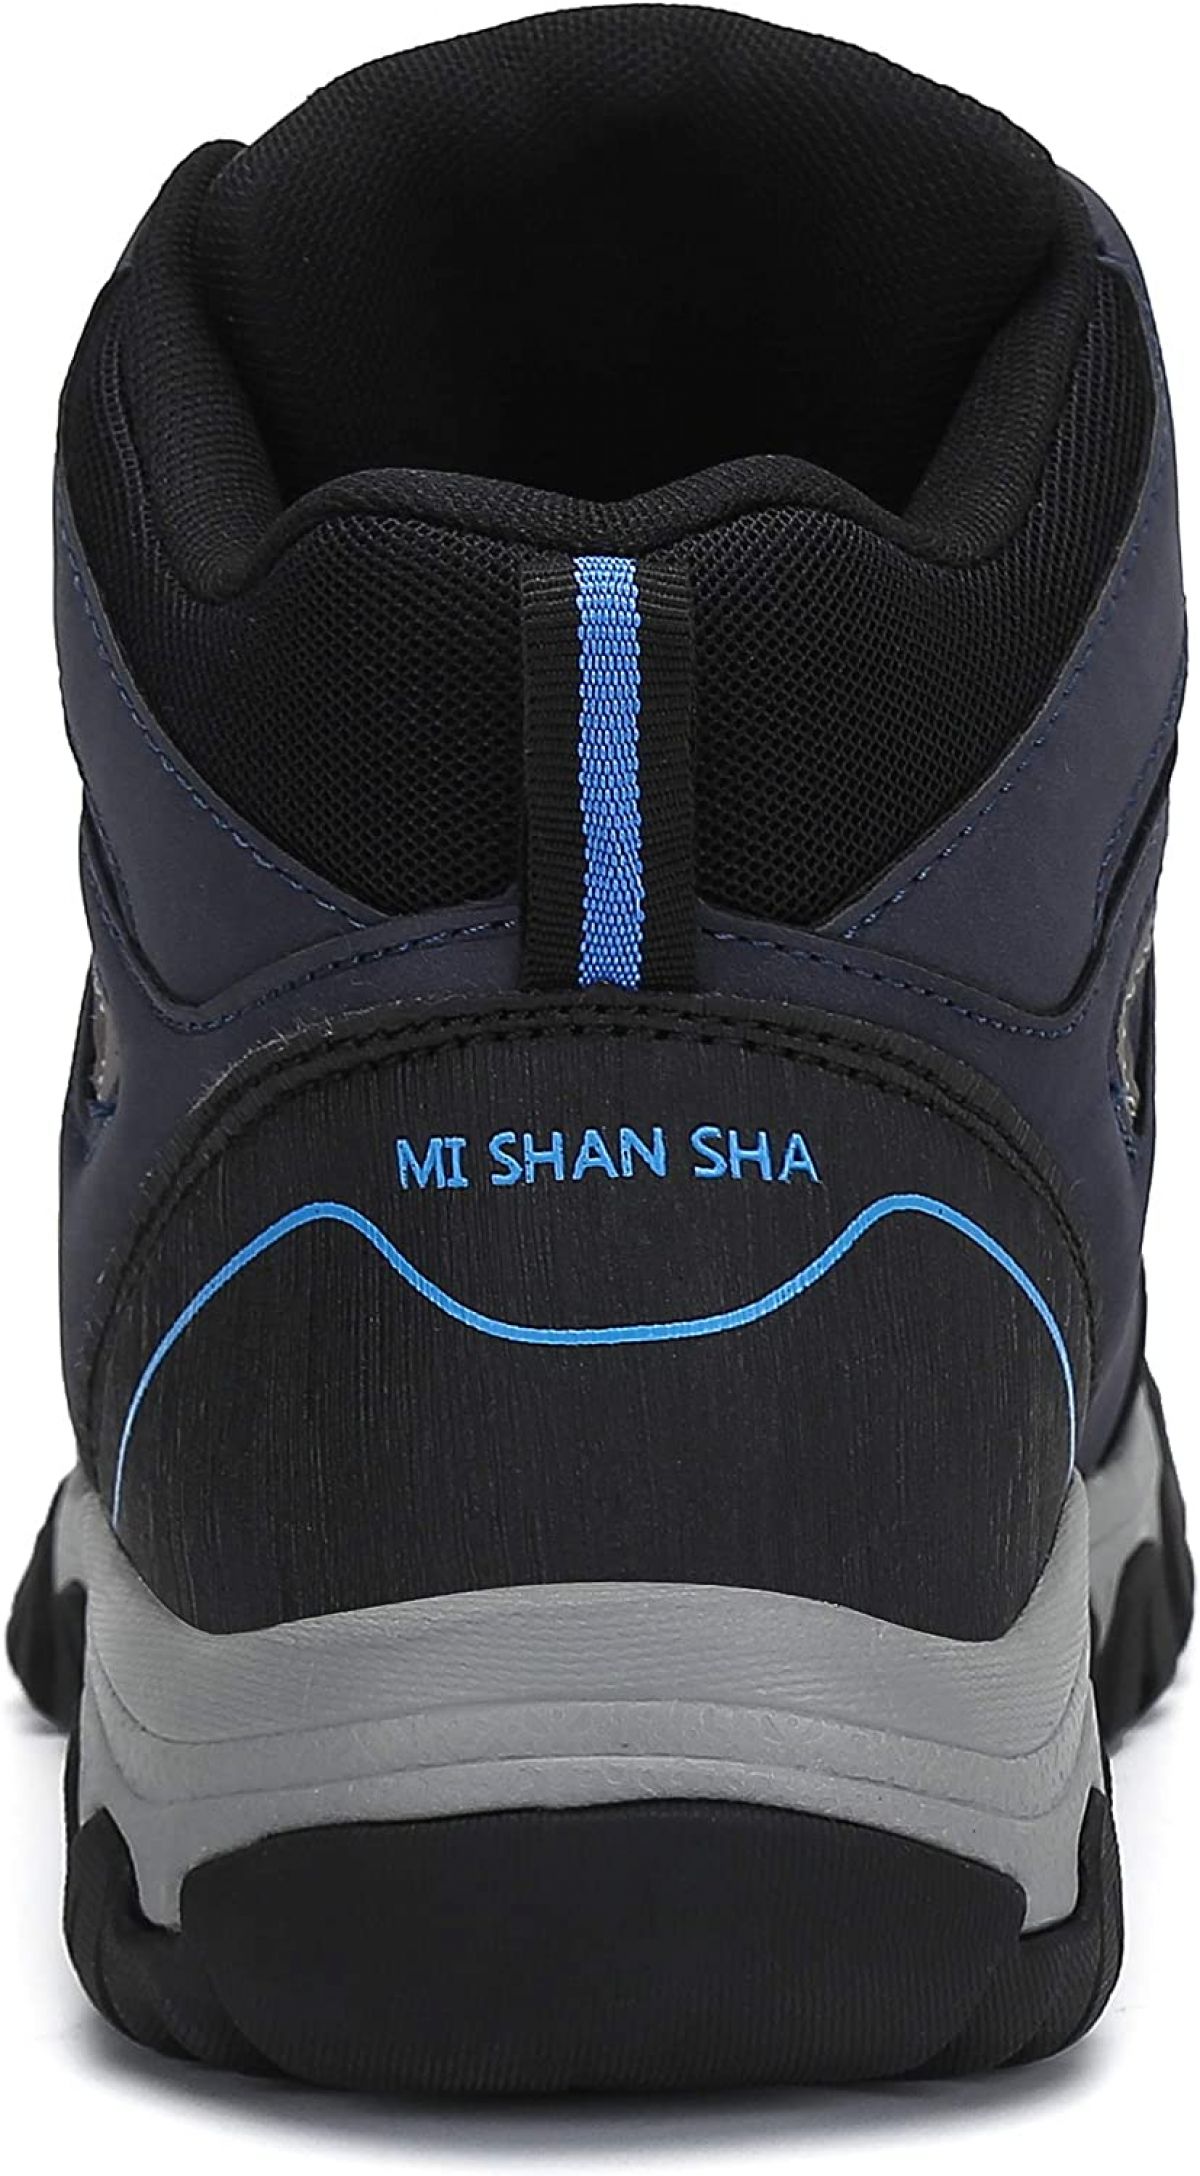 Mishansha Hiking Shoes for Men and Women 46